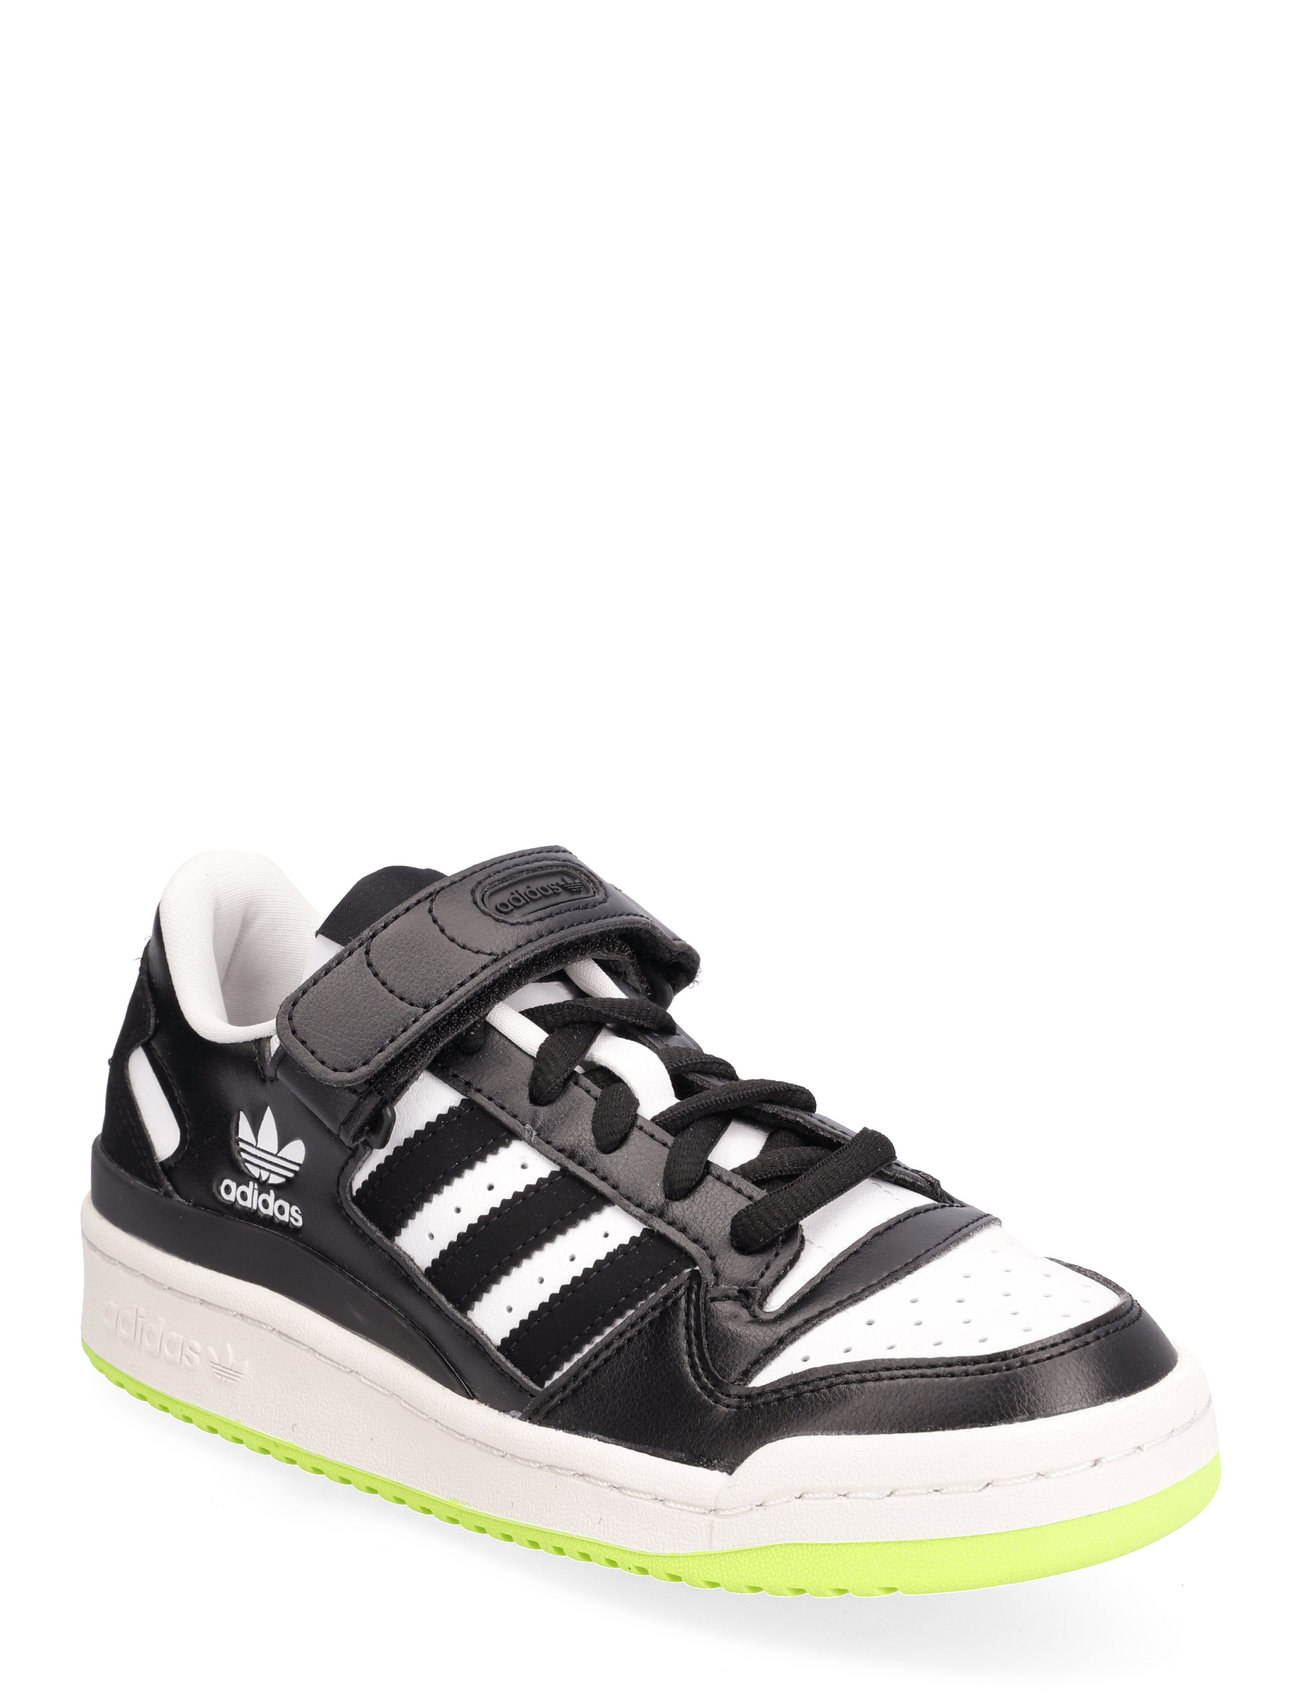 "adidas Originals" "Forum Low Shoes Sport Sneakers Low-top Adidas